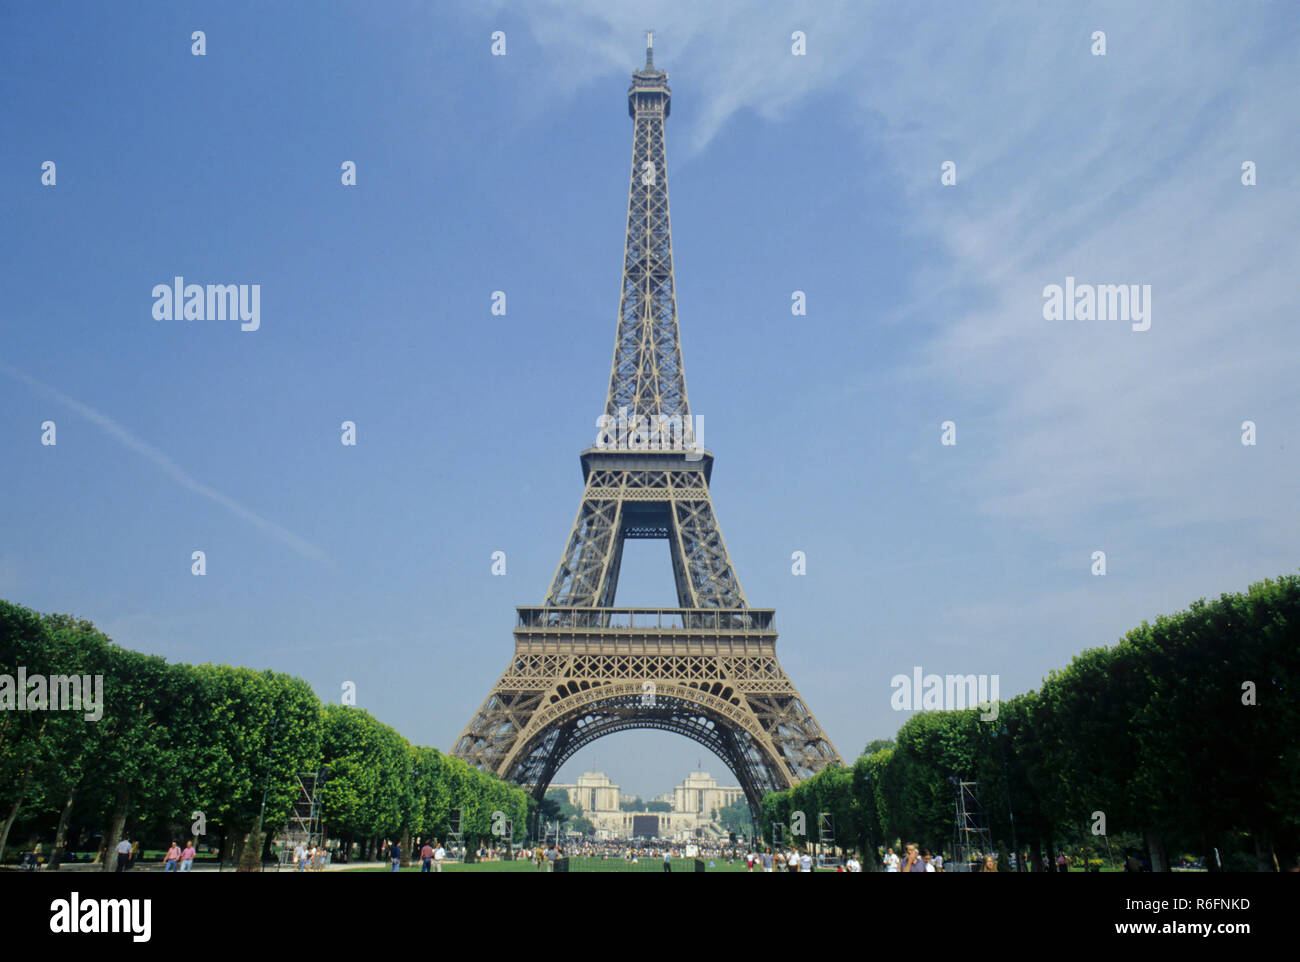 Eiffel Tower (Tour Eiffel), Paris, France Stock Photo